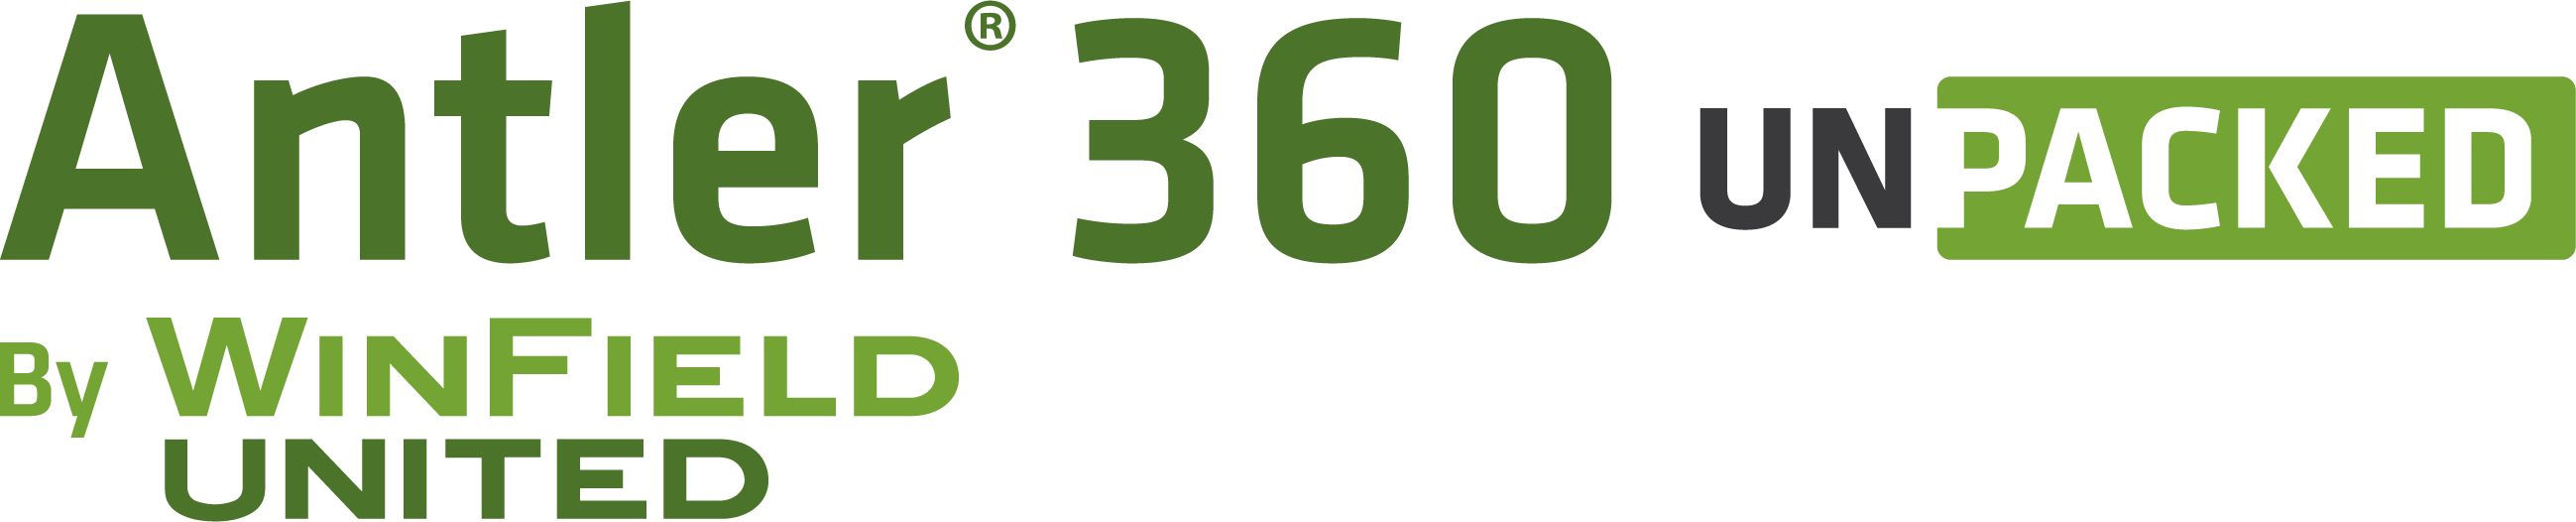 Antler® 360 Unpacked logo